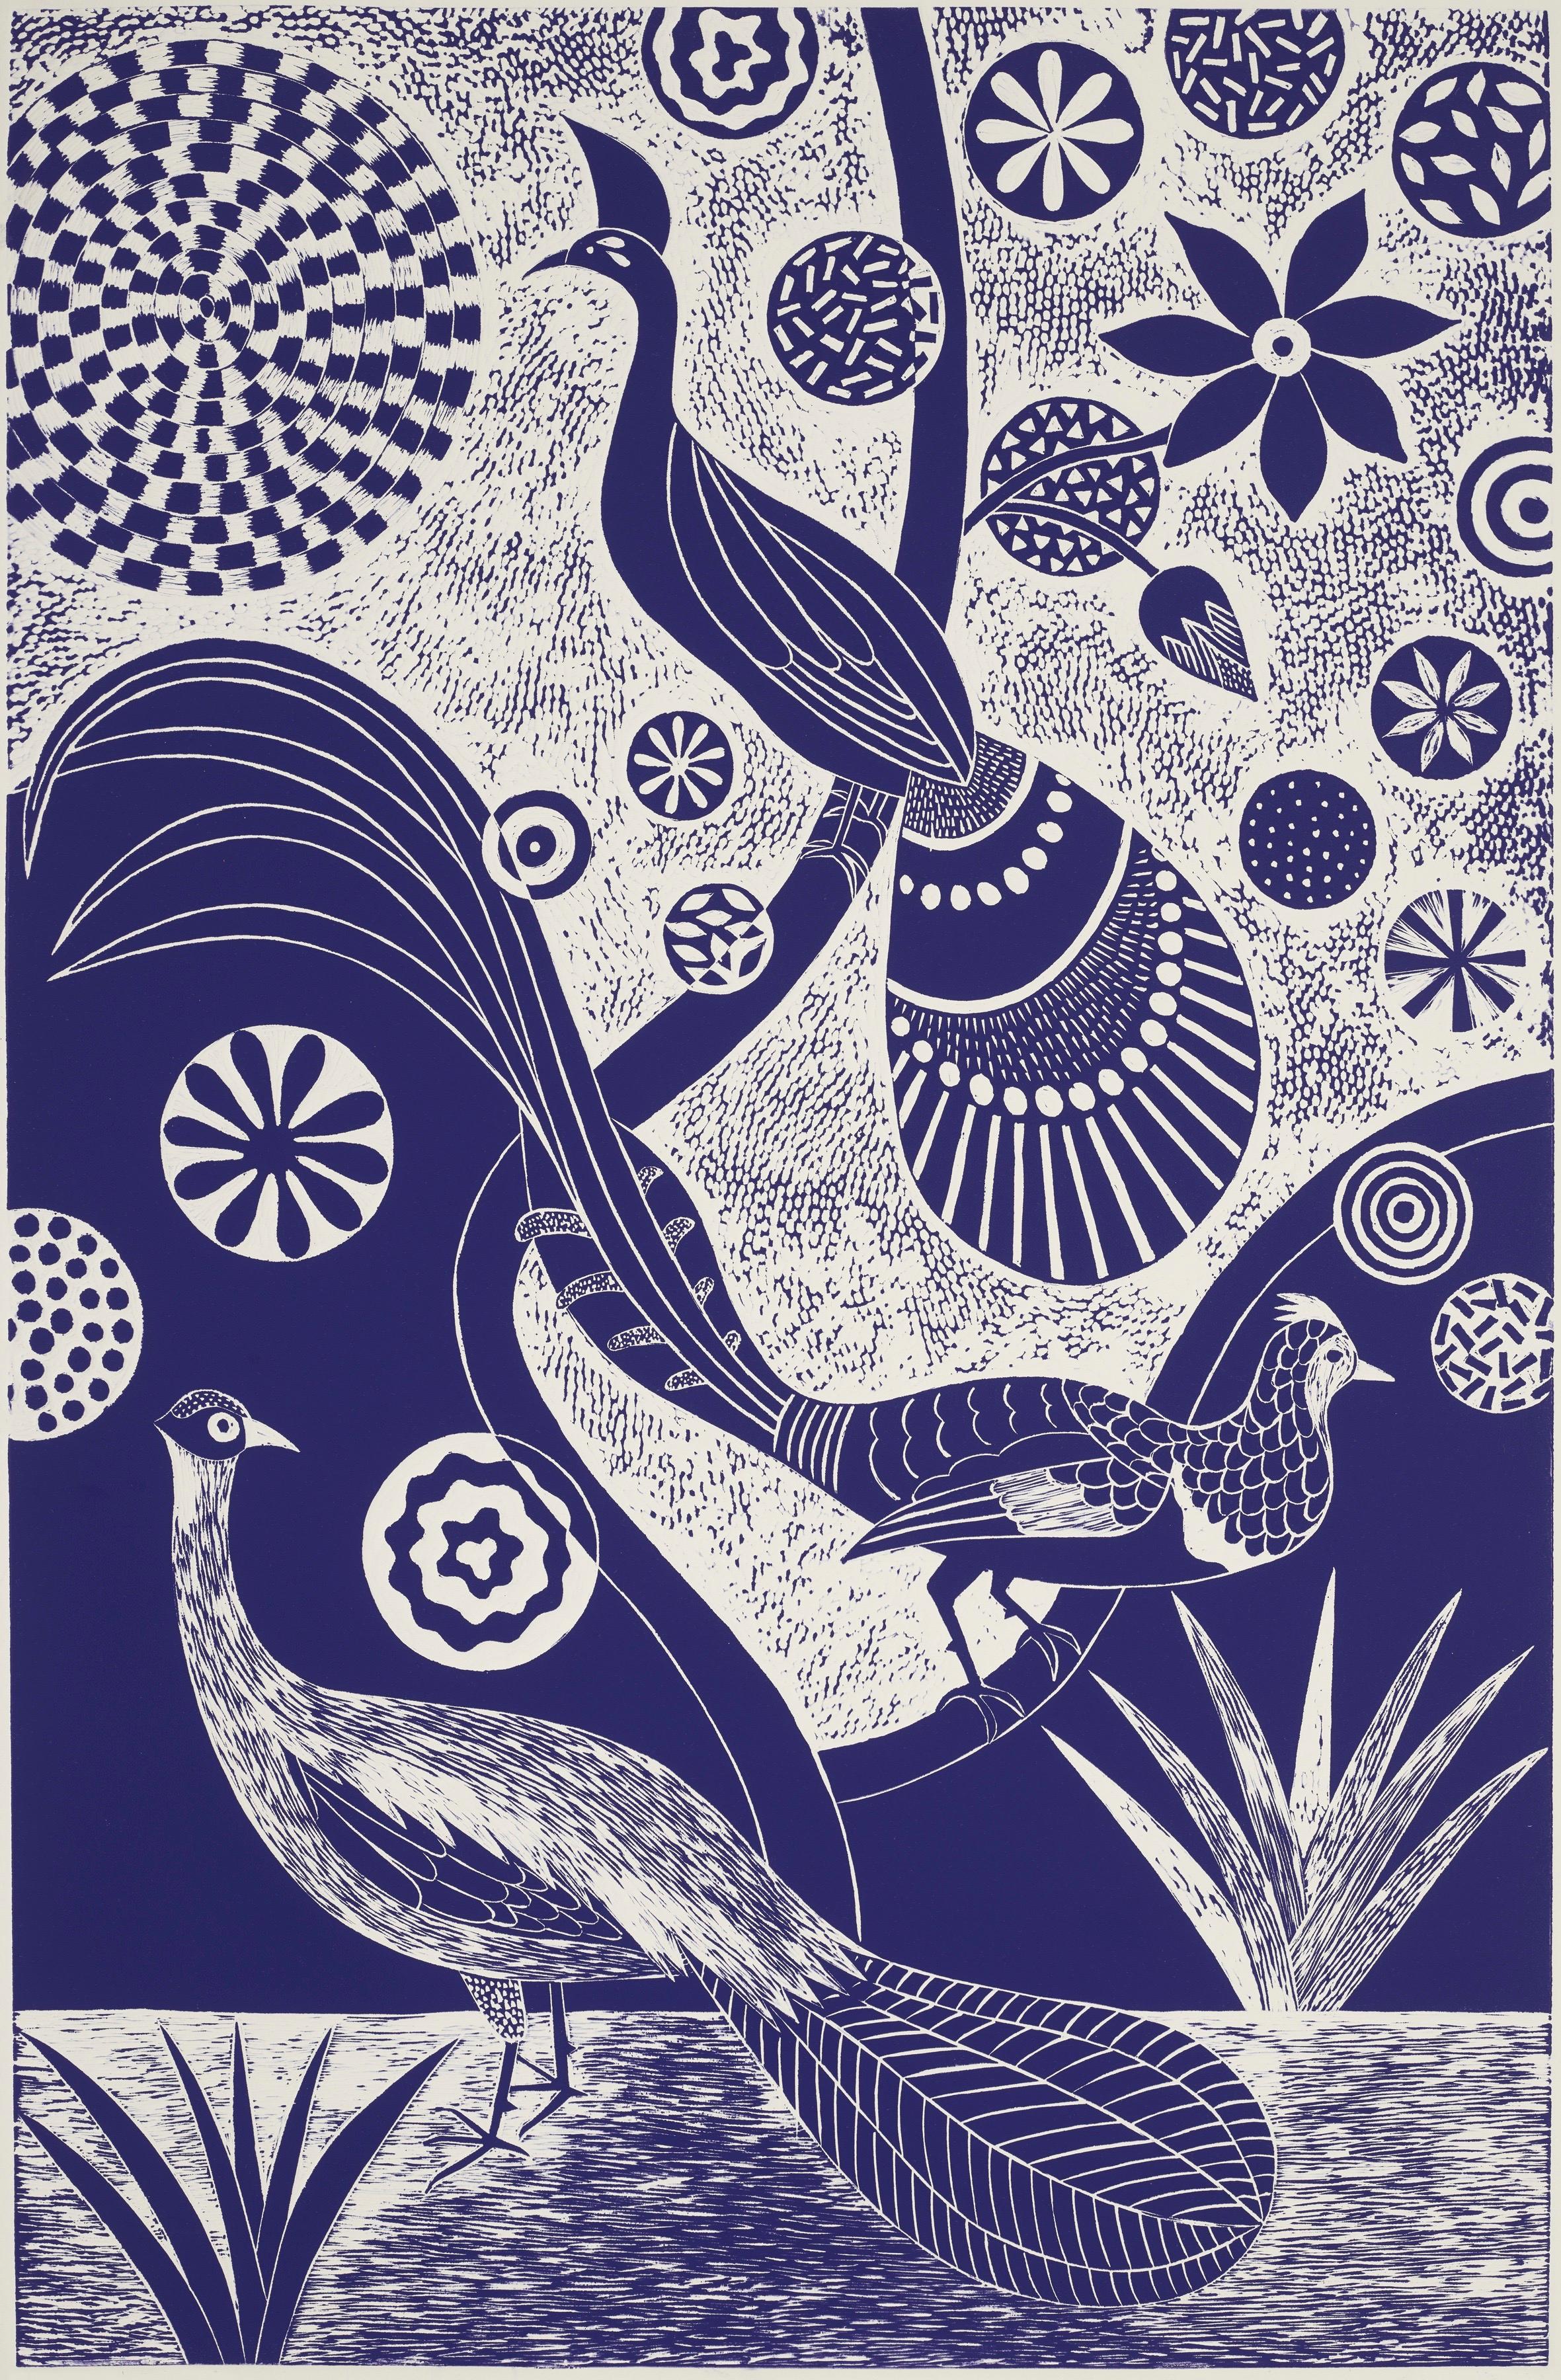 'Dipping and Diving'   Folk inspired linoleum block print of ducks in blue/white - Black Animal Print by Lisa Houck